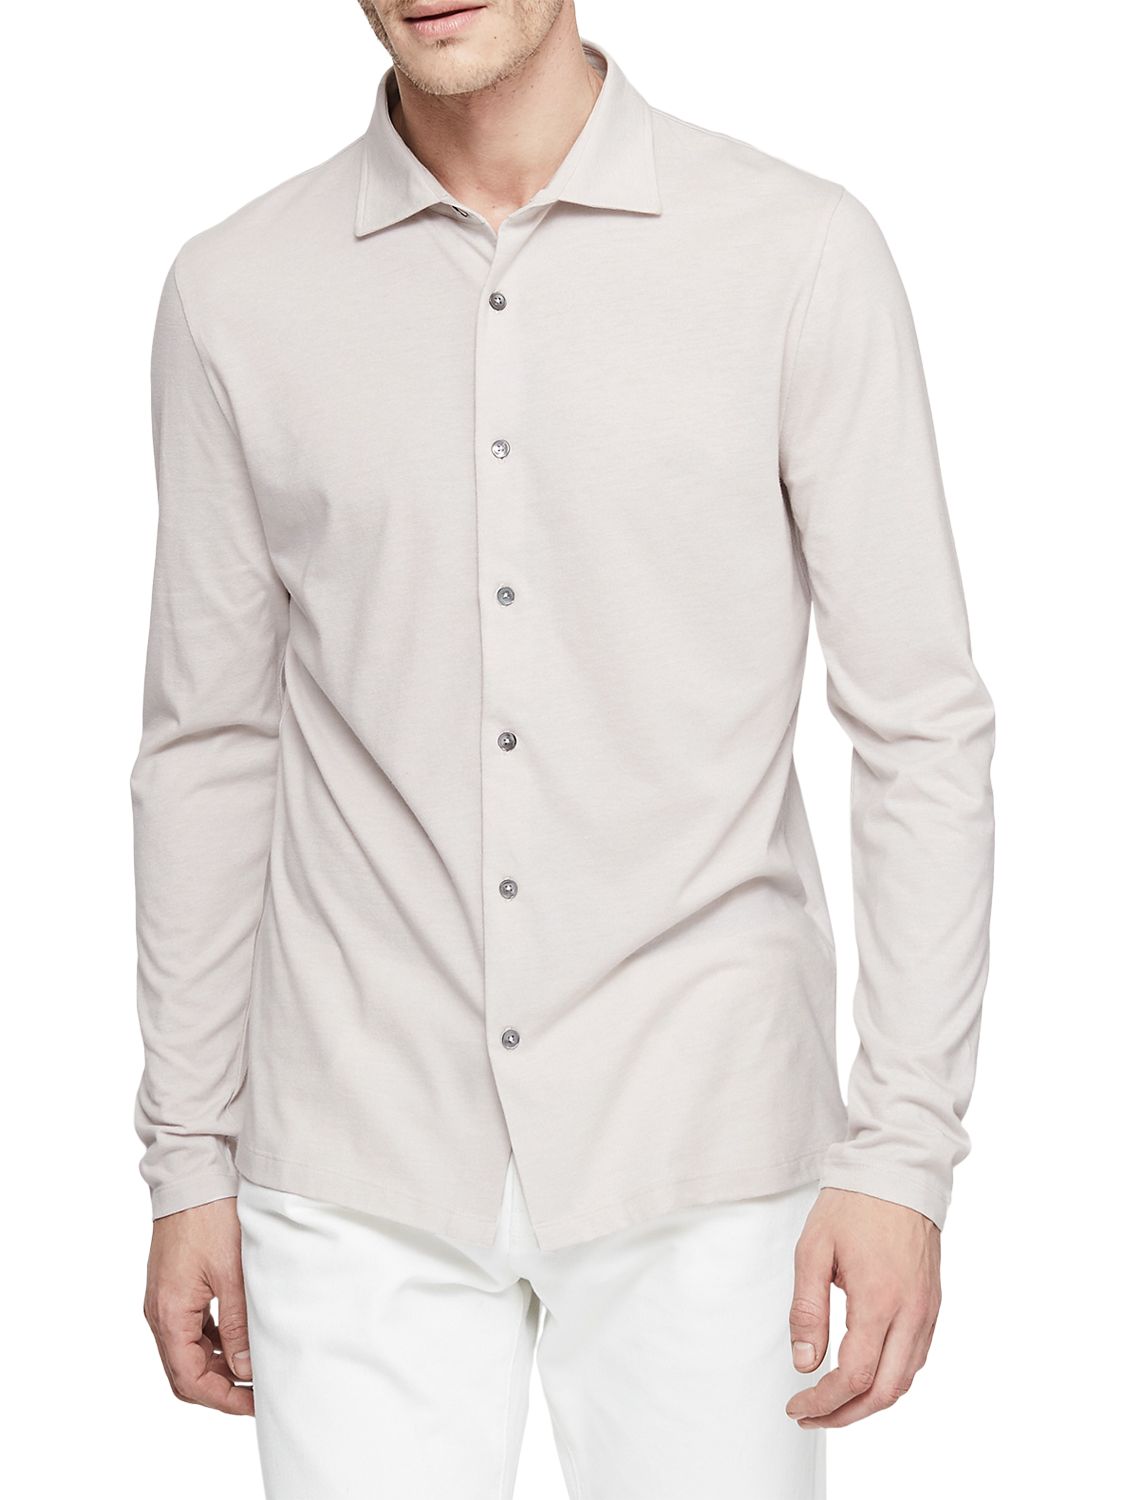 Reiss Oliver Jersey Shirt, Soft Grey, L